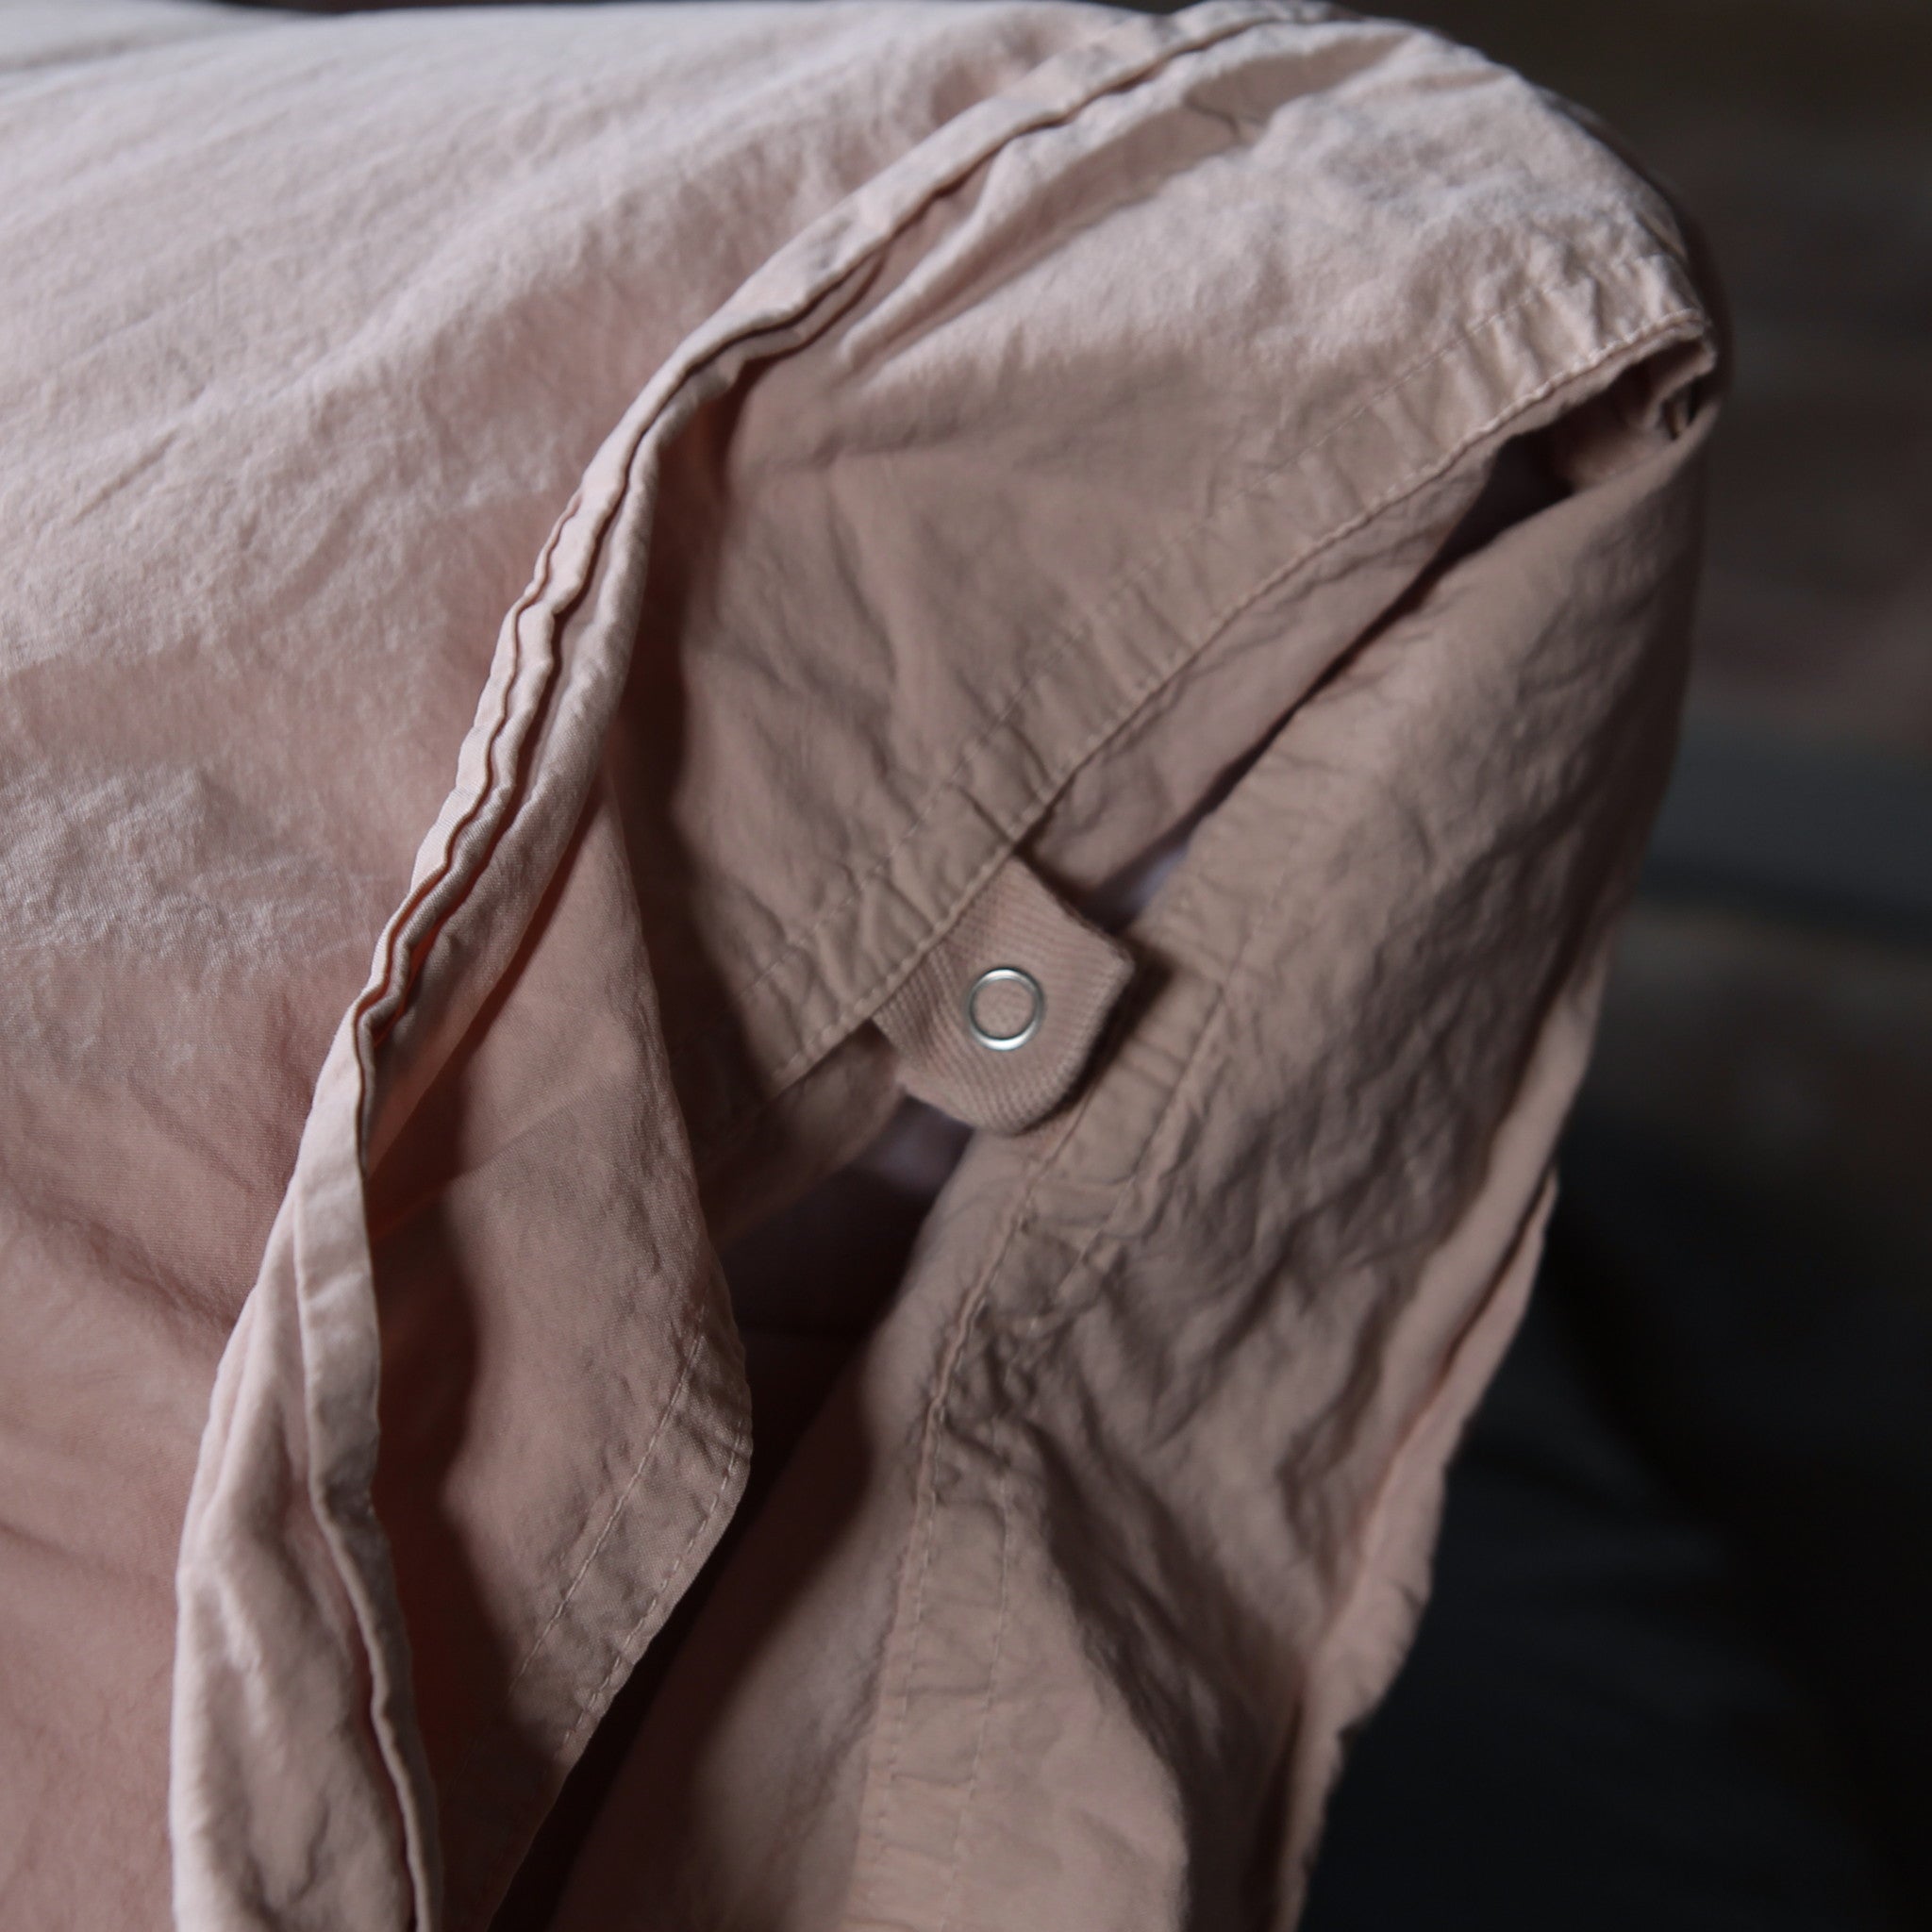 Detail of Son pillowcase